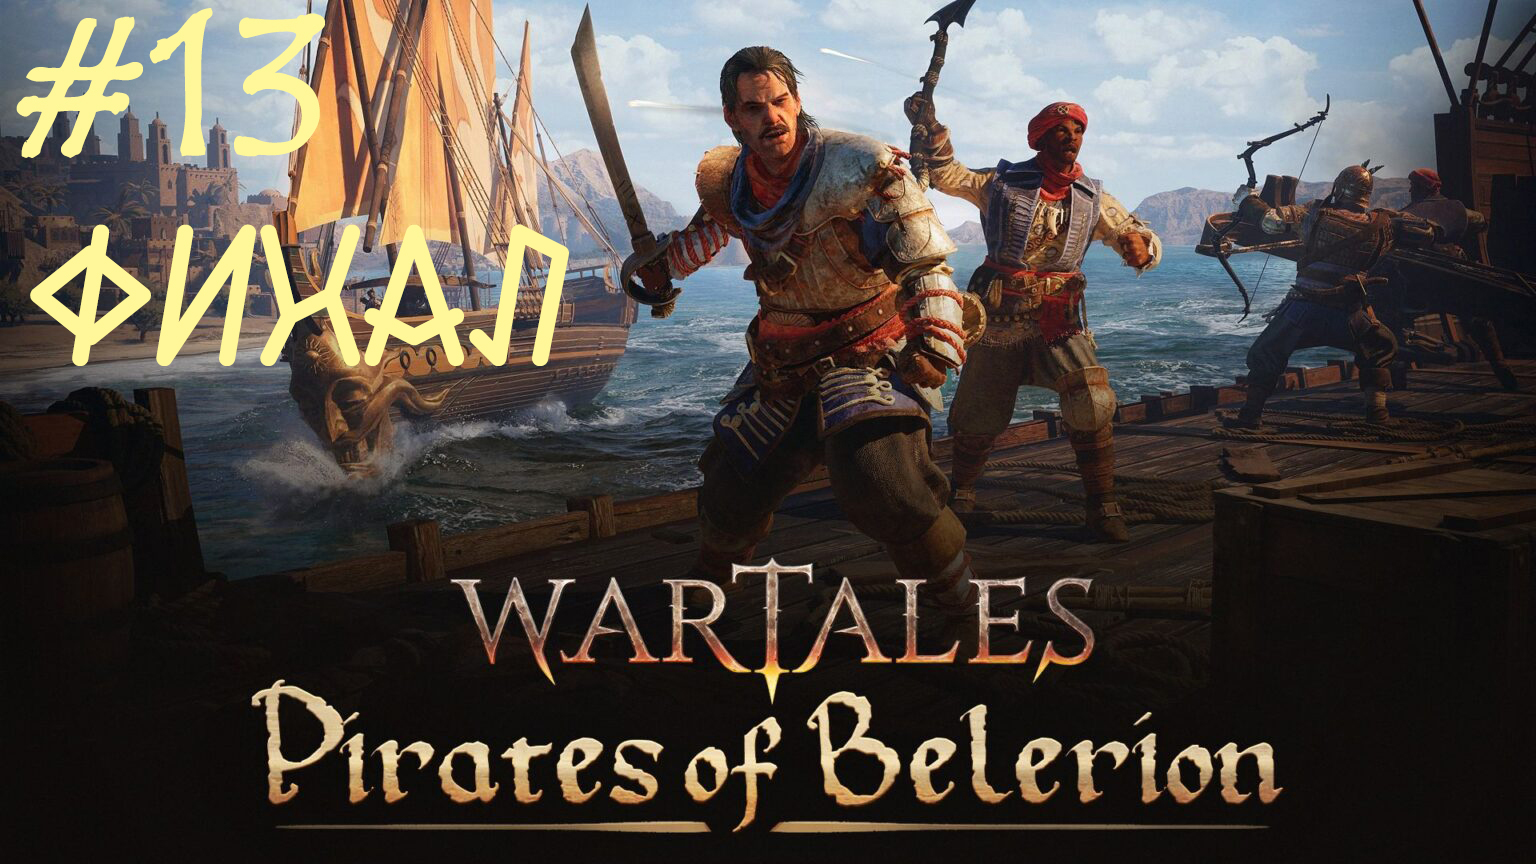 Пираты Белериона! Wartales Pirates of Belerion #13 ФИНАЛ